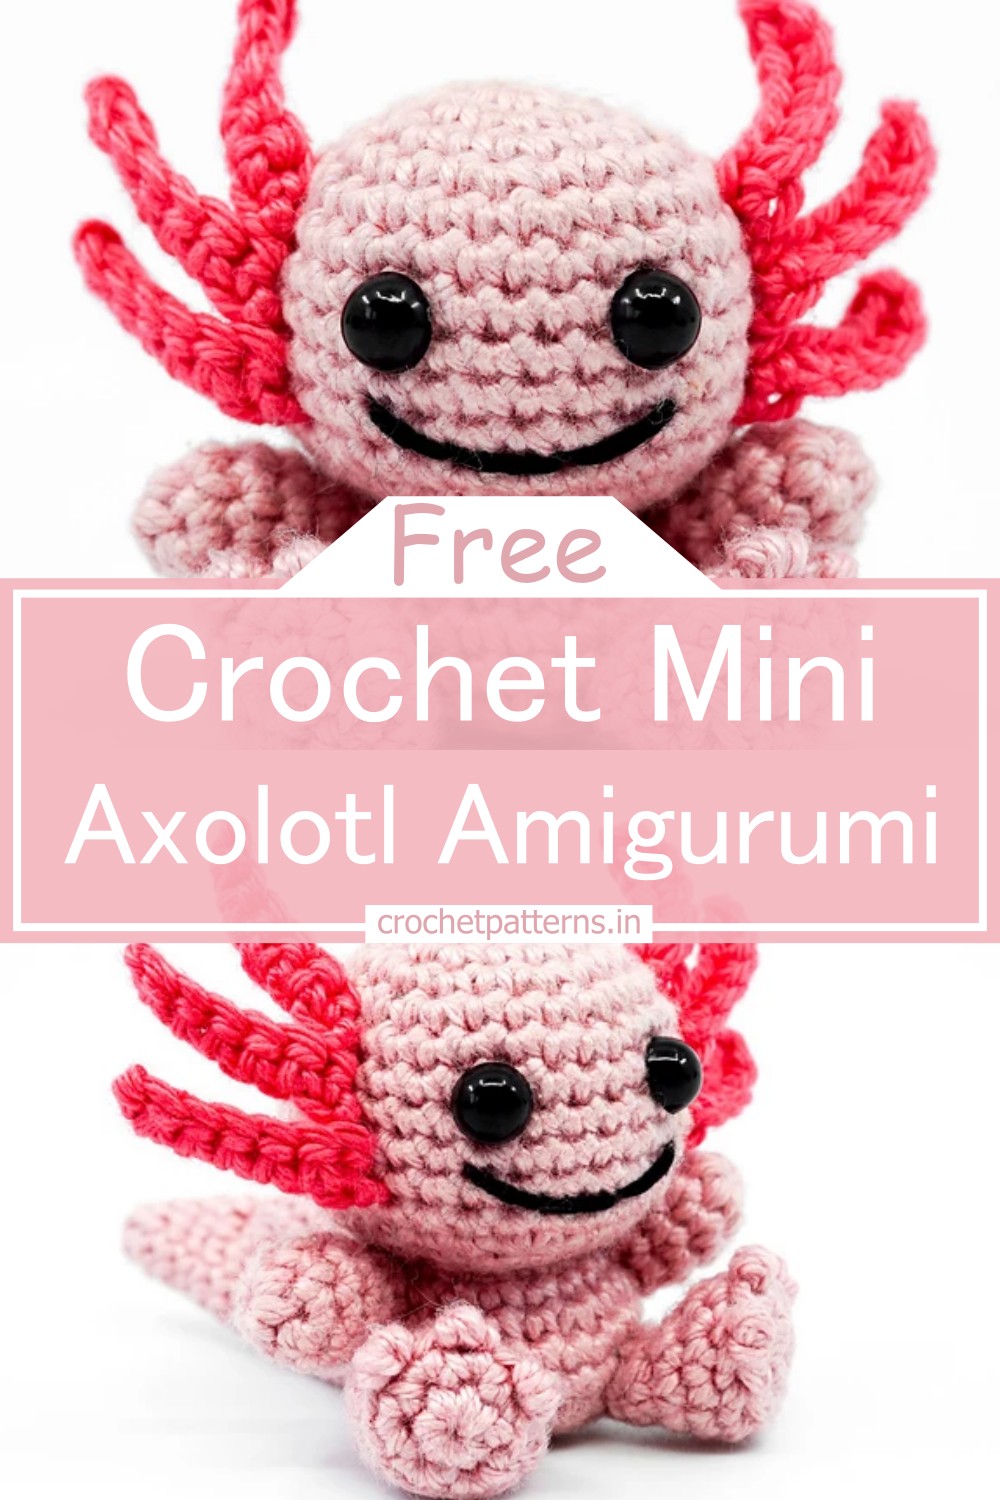 Mini Axolotl Amigurumi